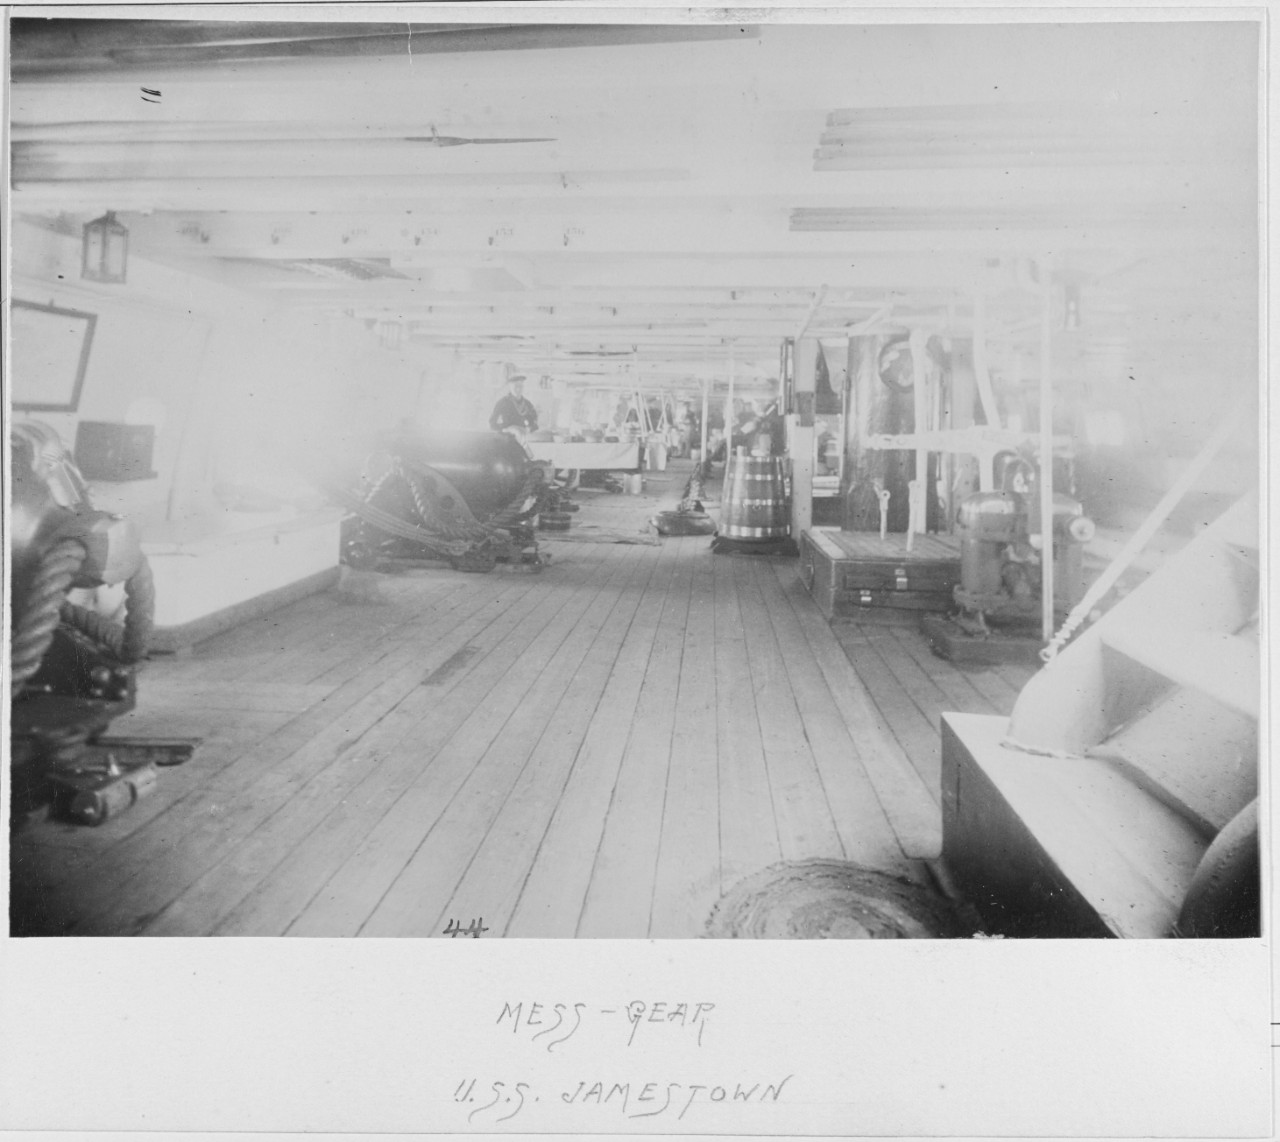 USS JAMESTOWN 1844-1913